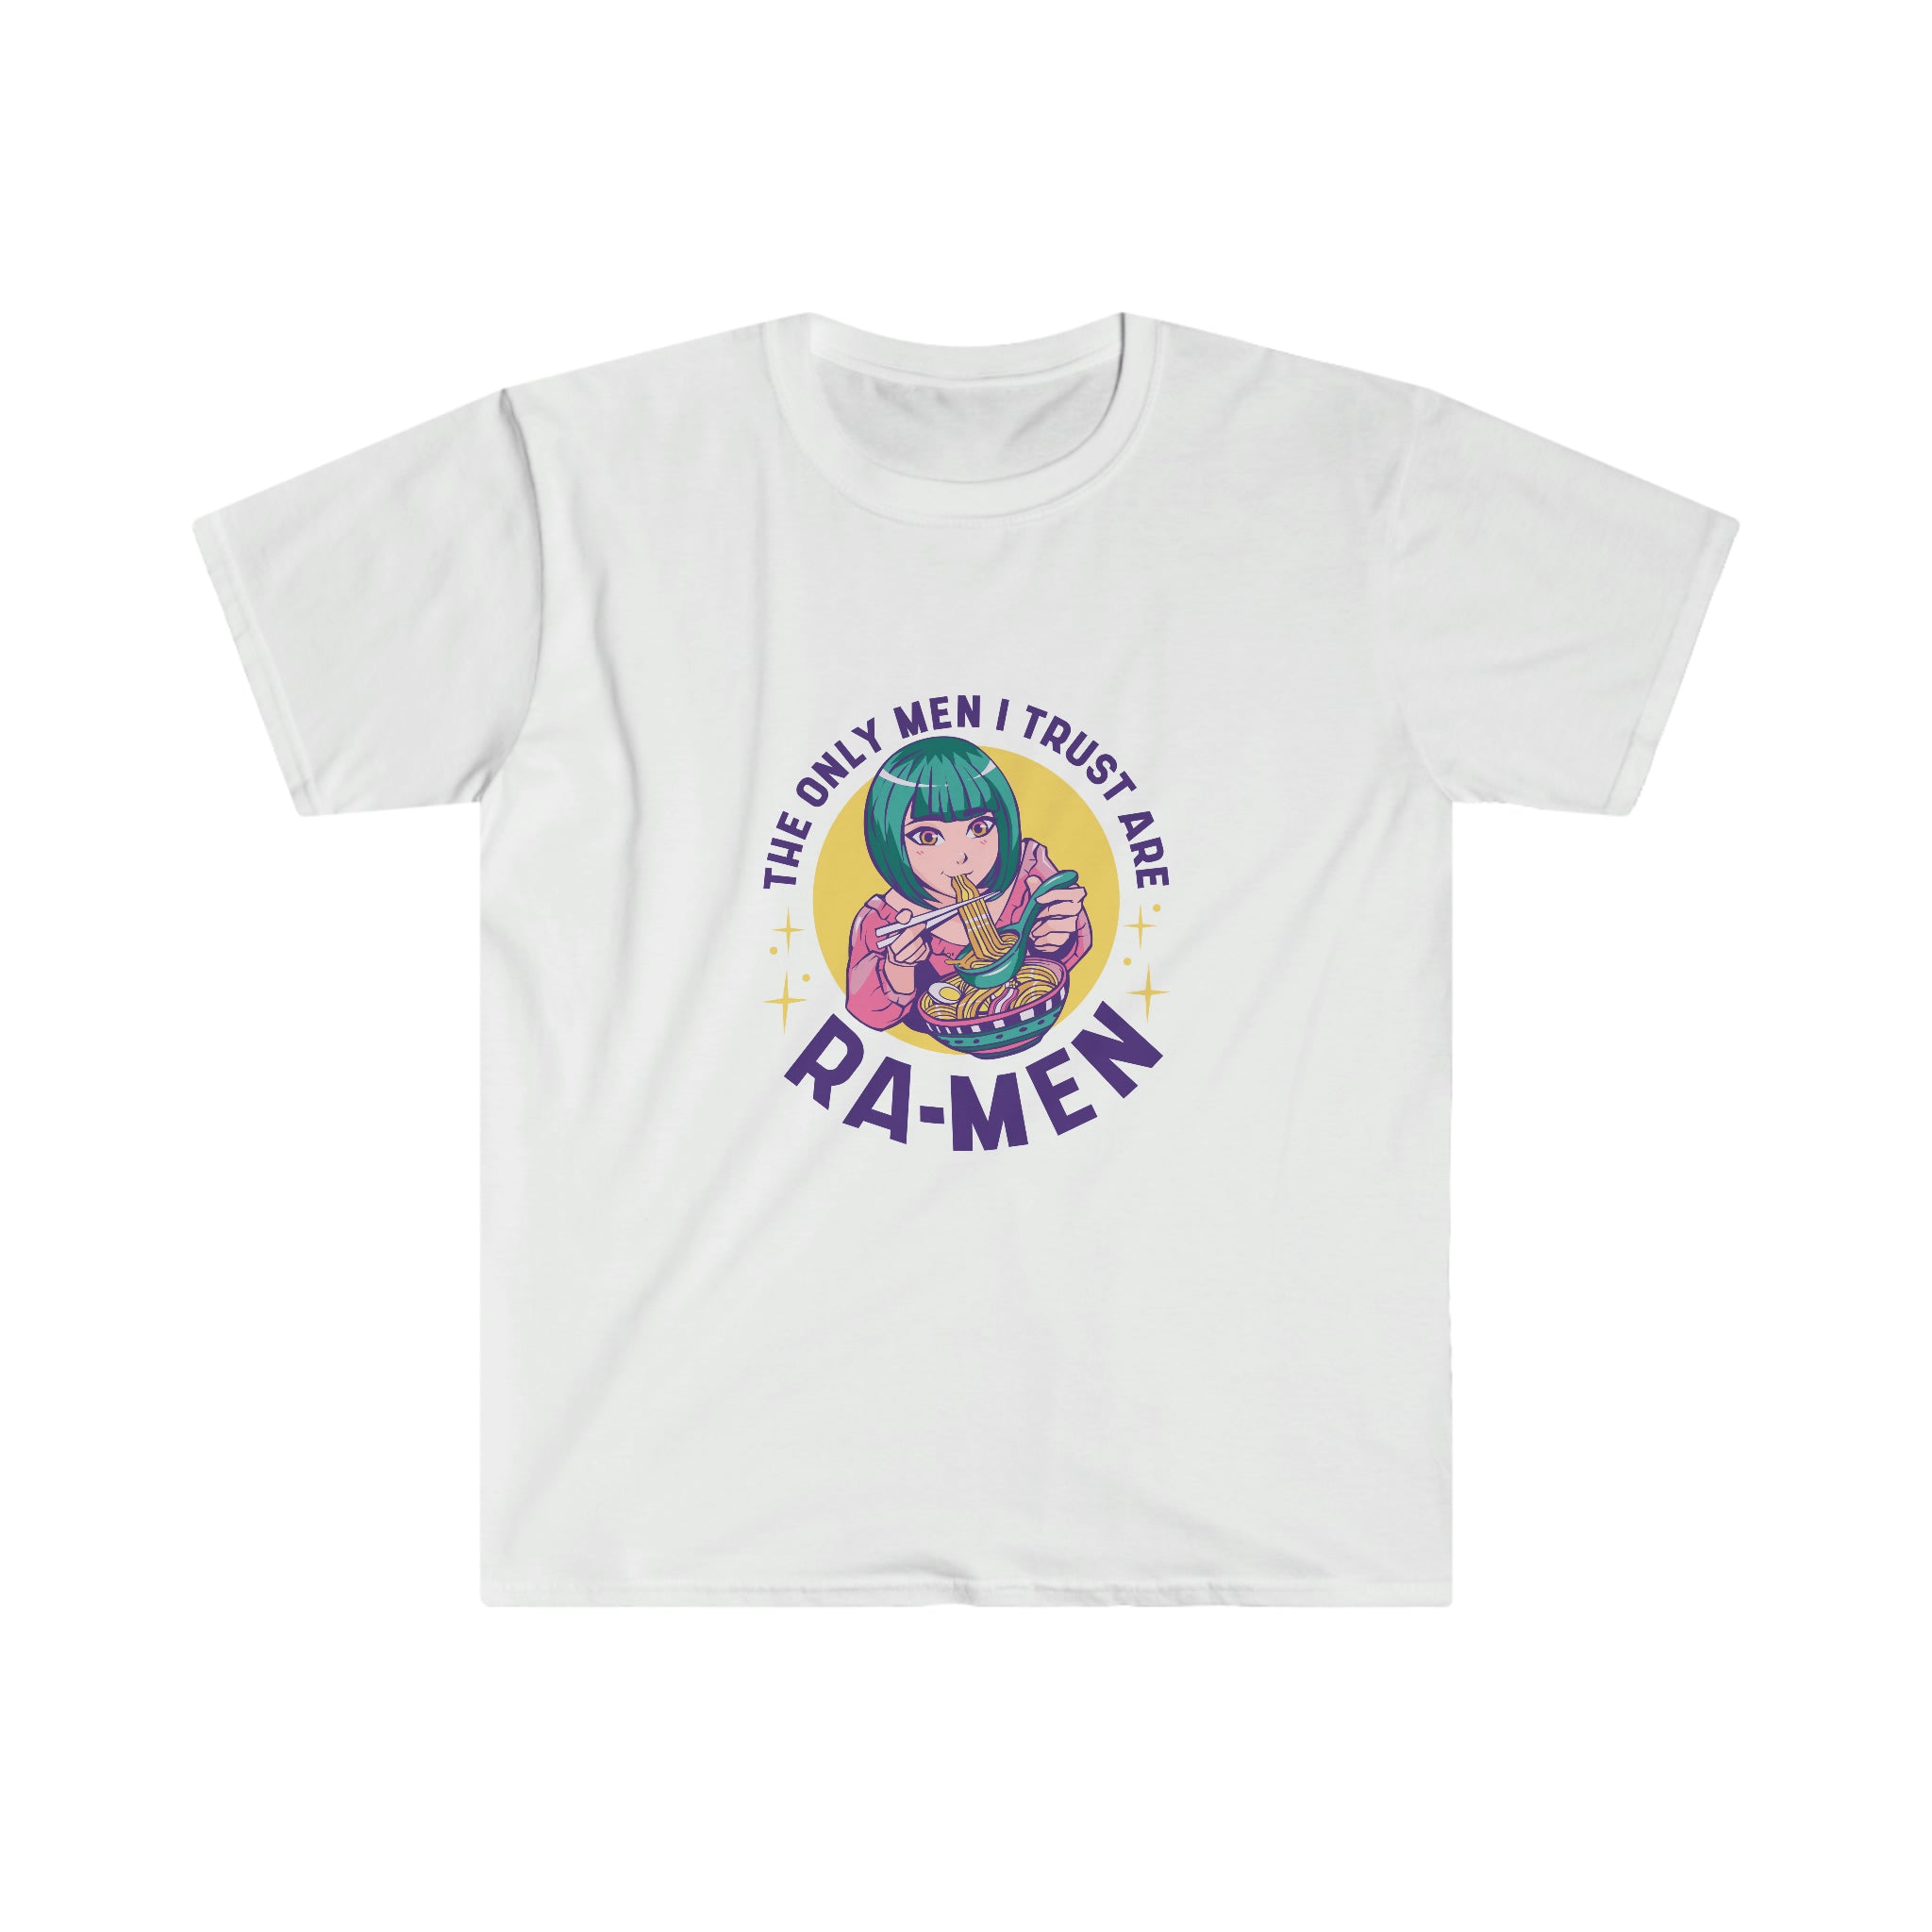 A manga-inspired Ramen Girl T-Shirt featuring a cute Ramen Girl character.